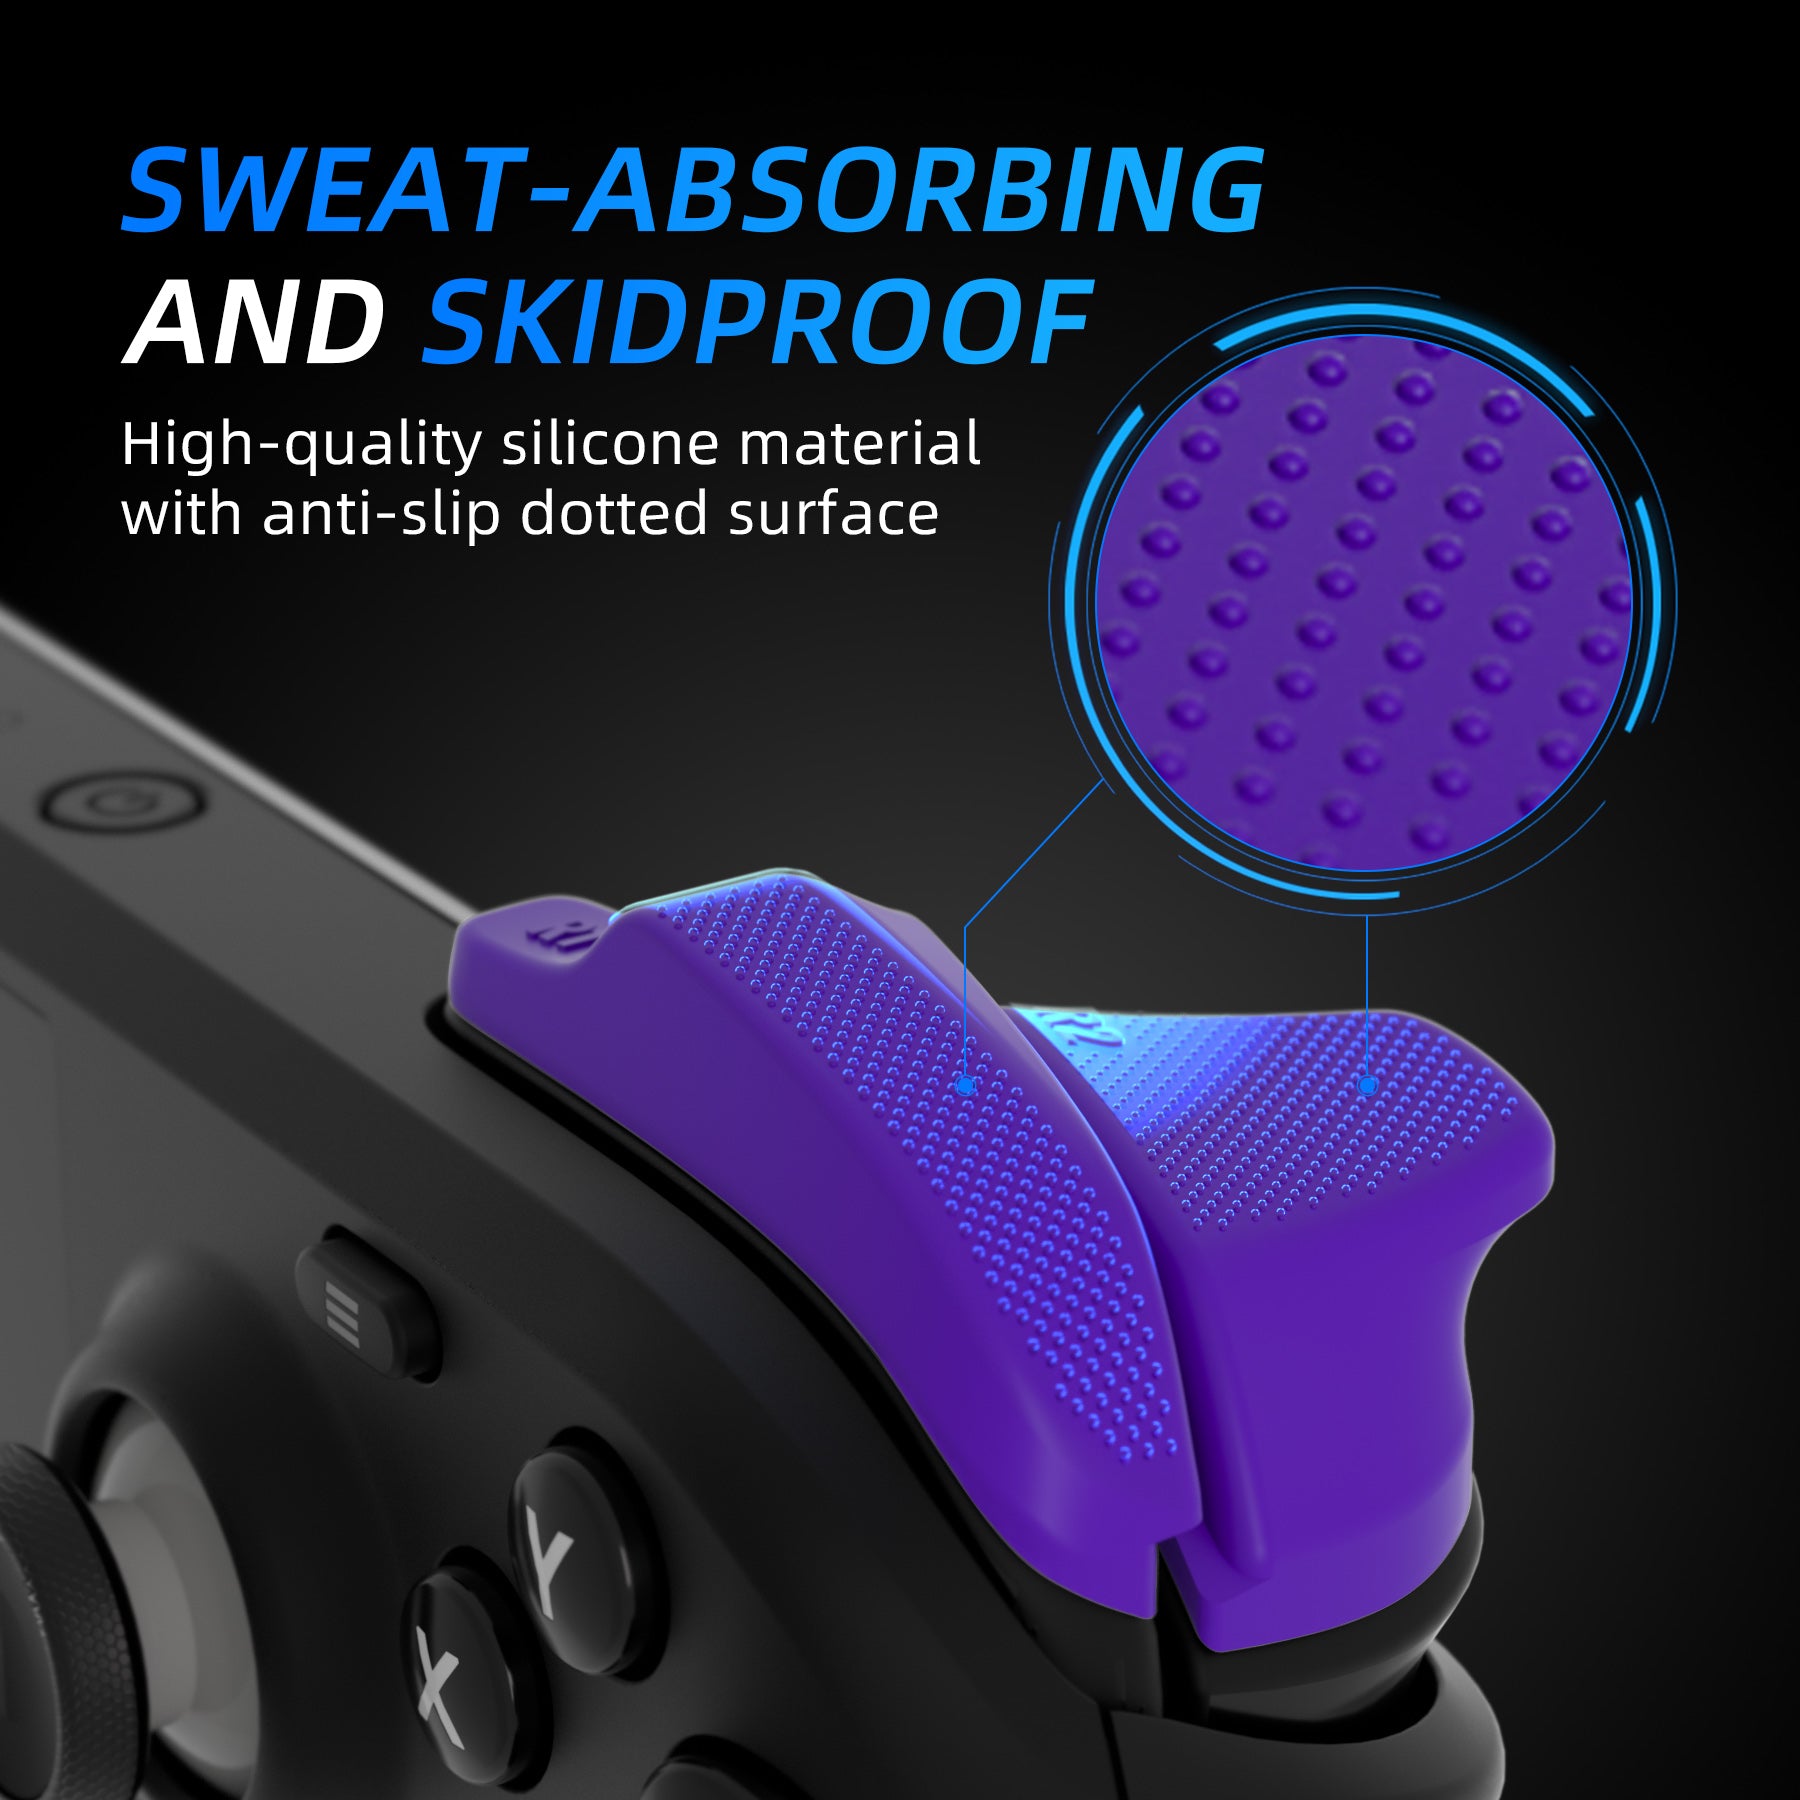 PlayVital LR INCREASER Shoulder Buttons Trigger Enhancement Set for Steam Deck - Purple - DJMSDJ003 PlayVital